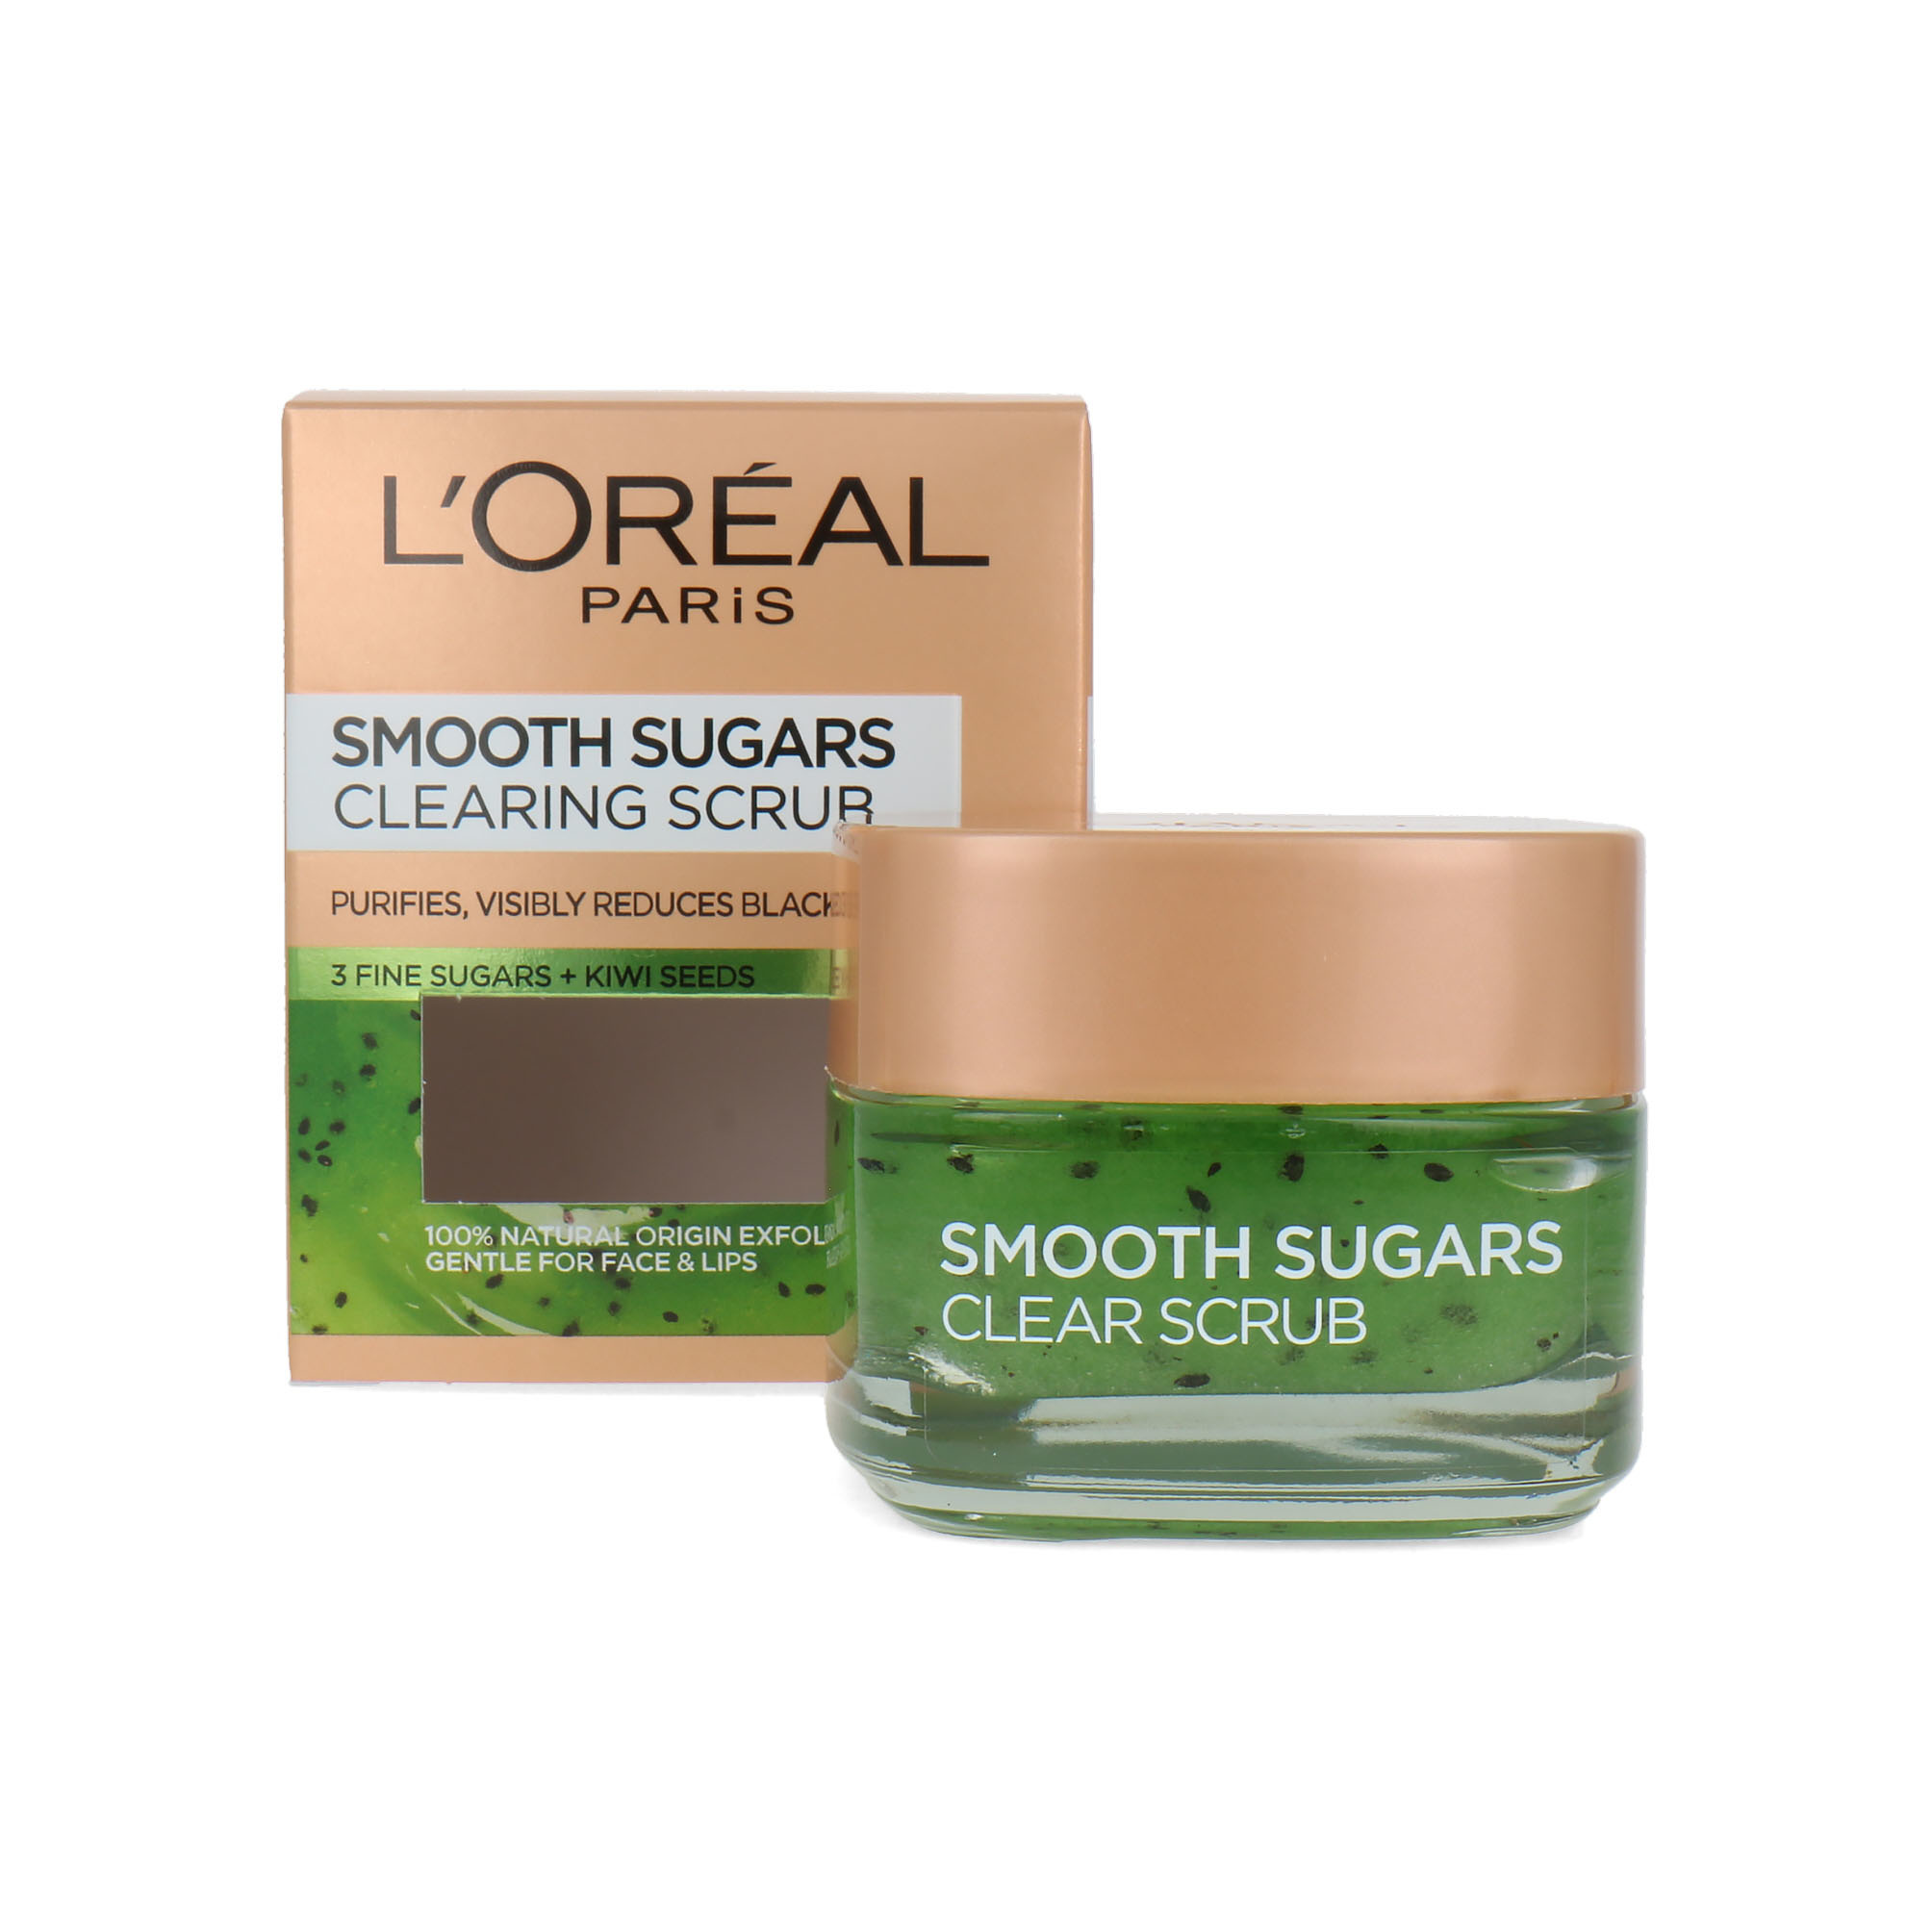 paar Bedrog overhemd L'Oréal Smooth Sugars Clearing Scrub - 50 ml online kopen bij Blisso